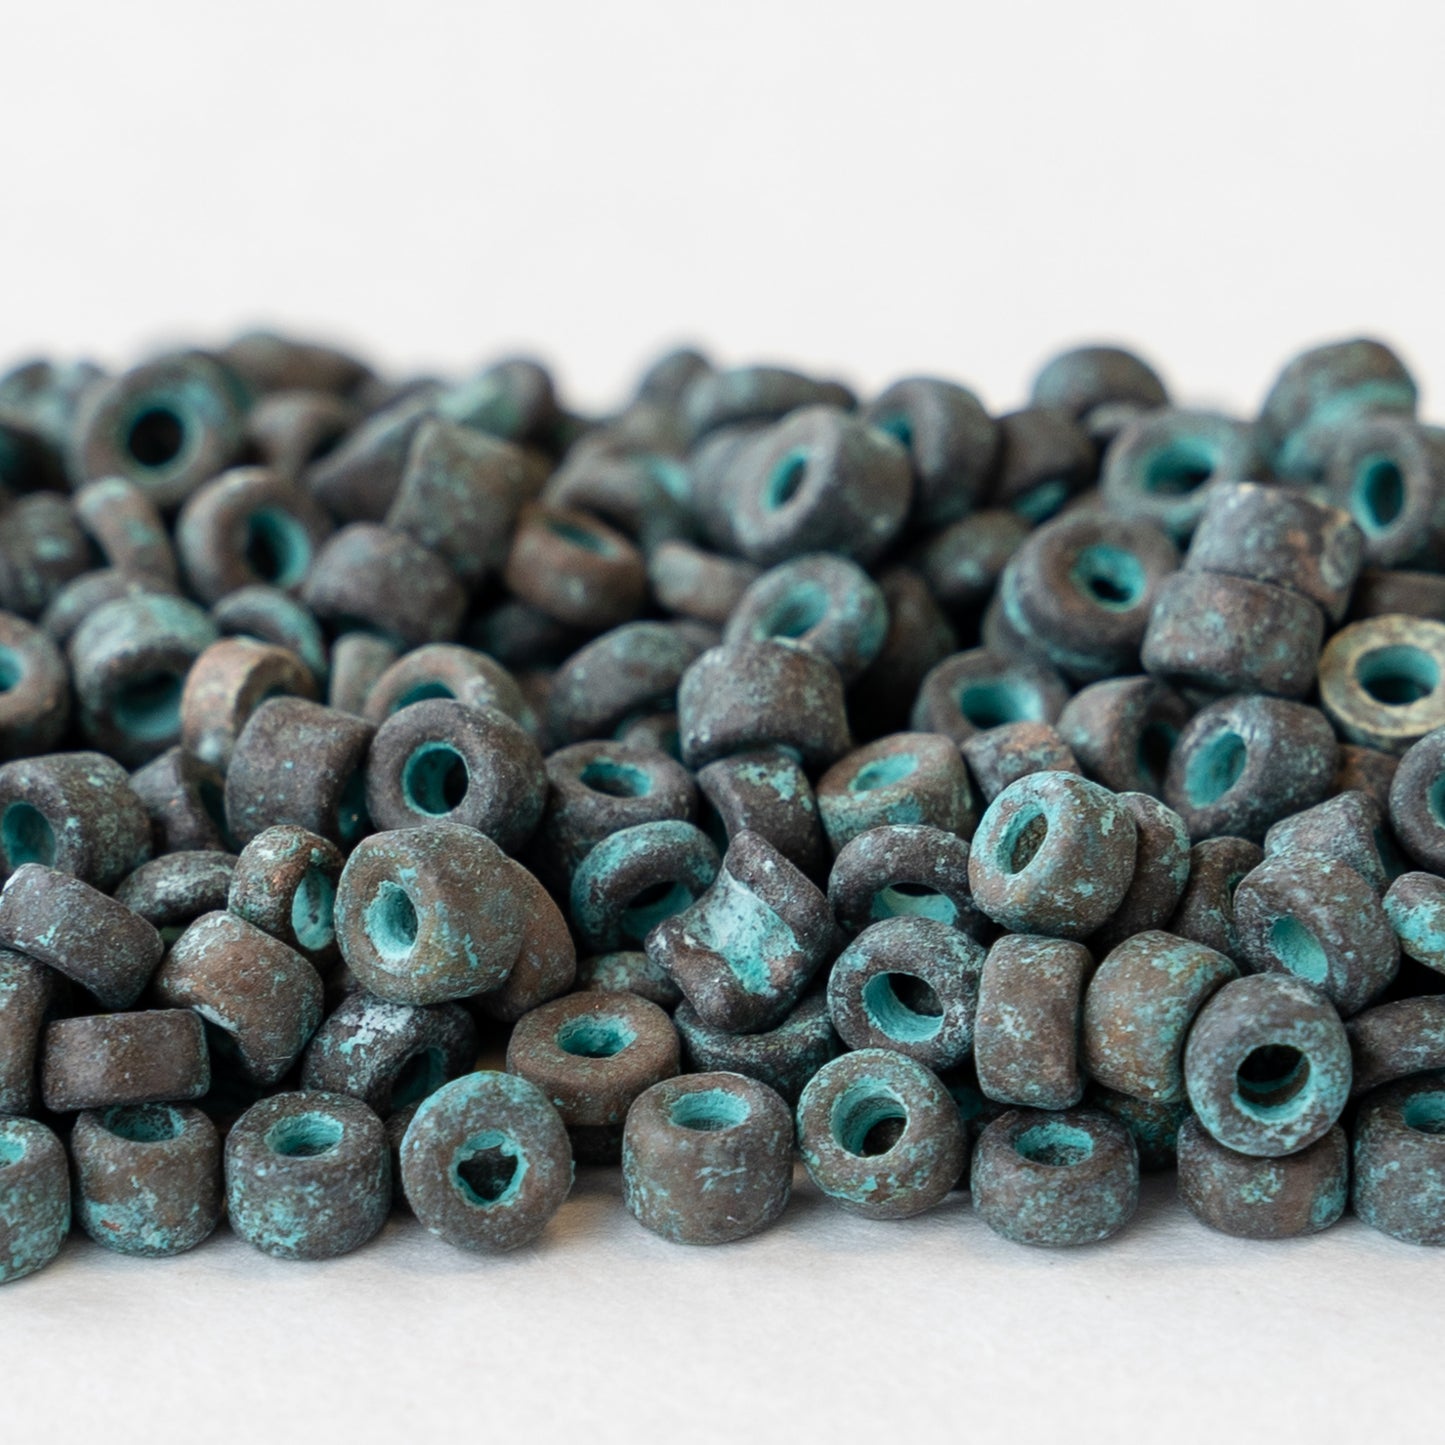 2-4mm Metal Coated Ceramic Seed Beads - Green Patina - Choose Amount